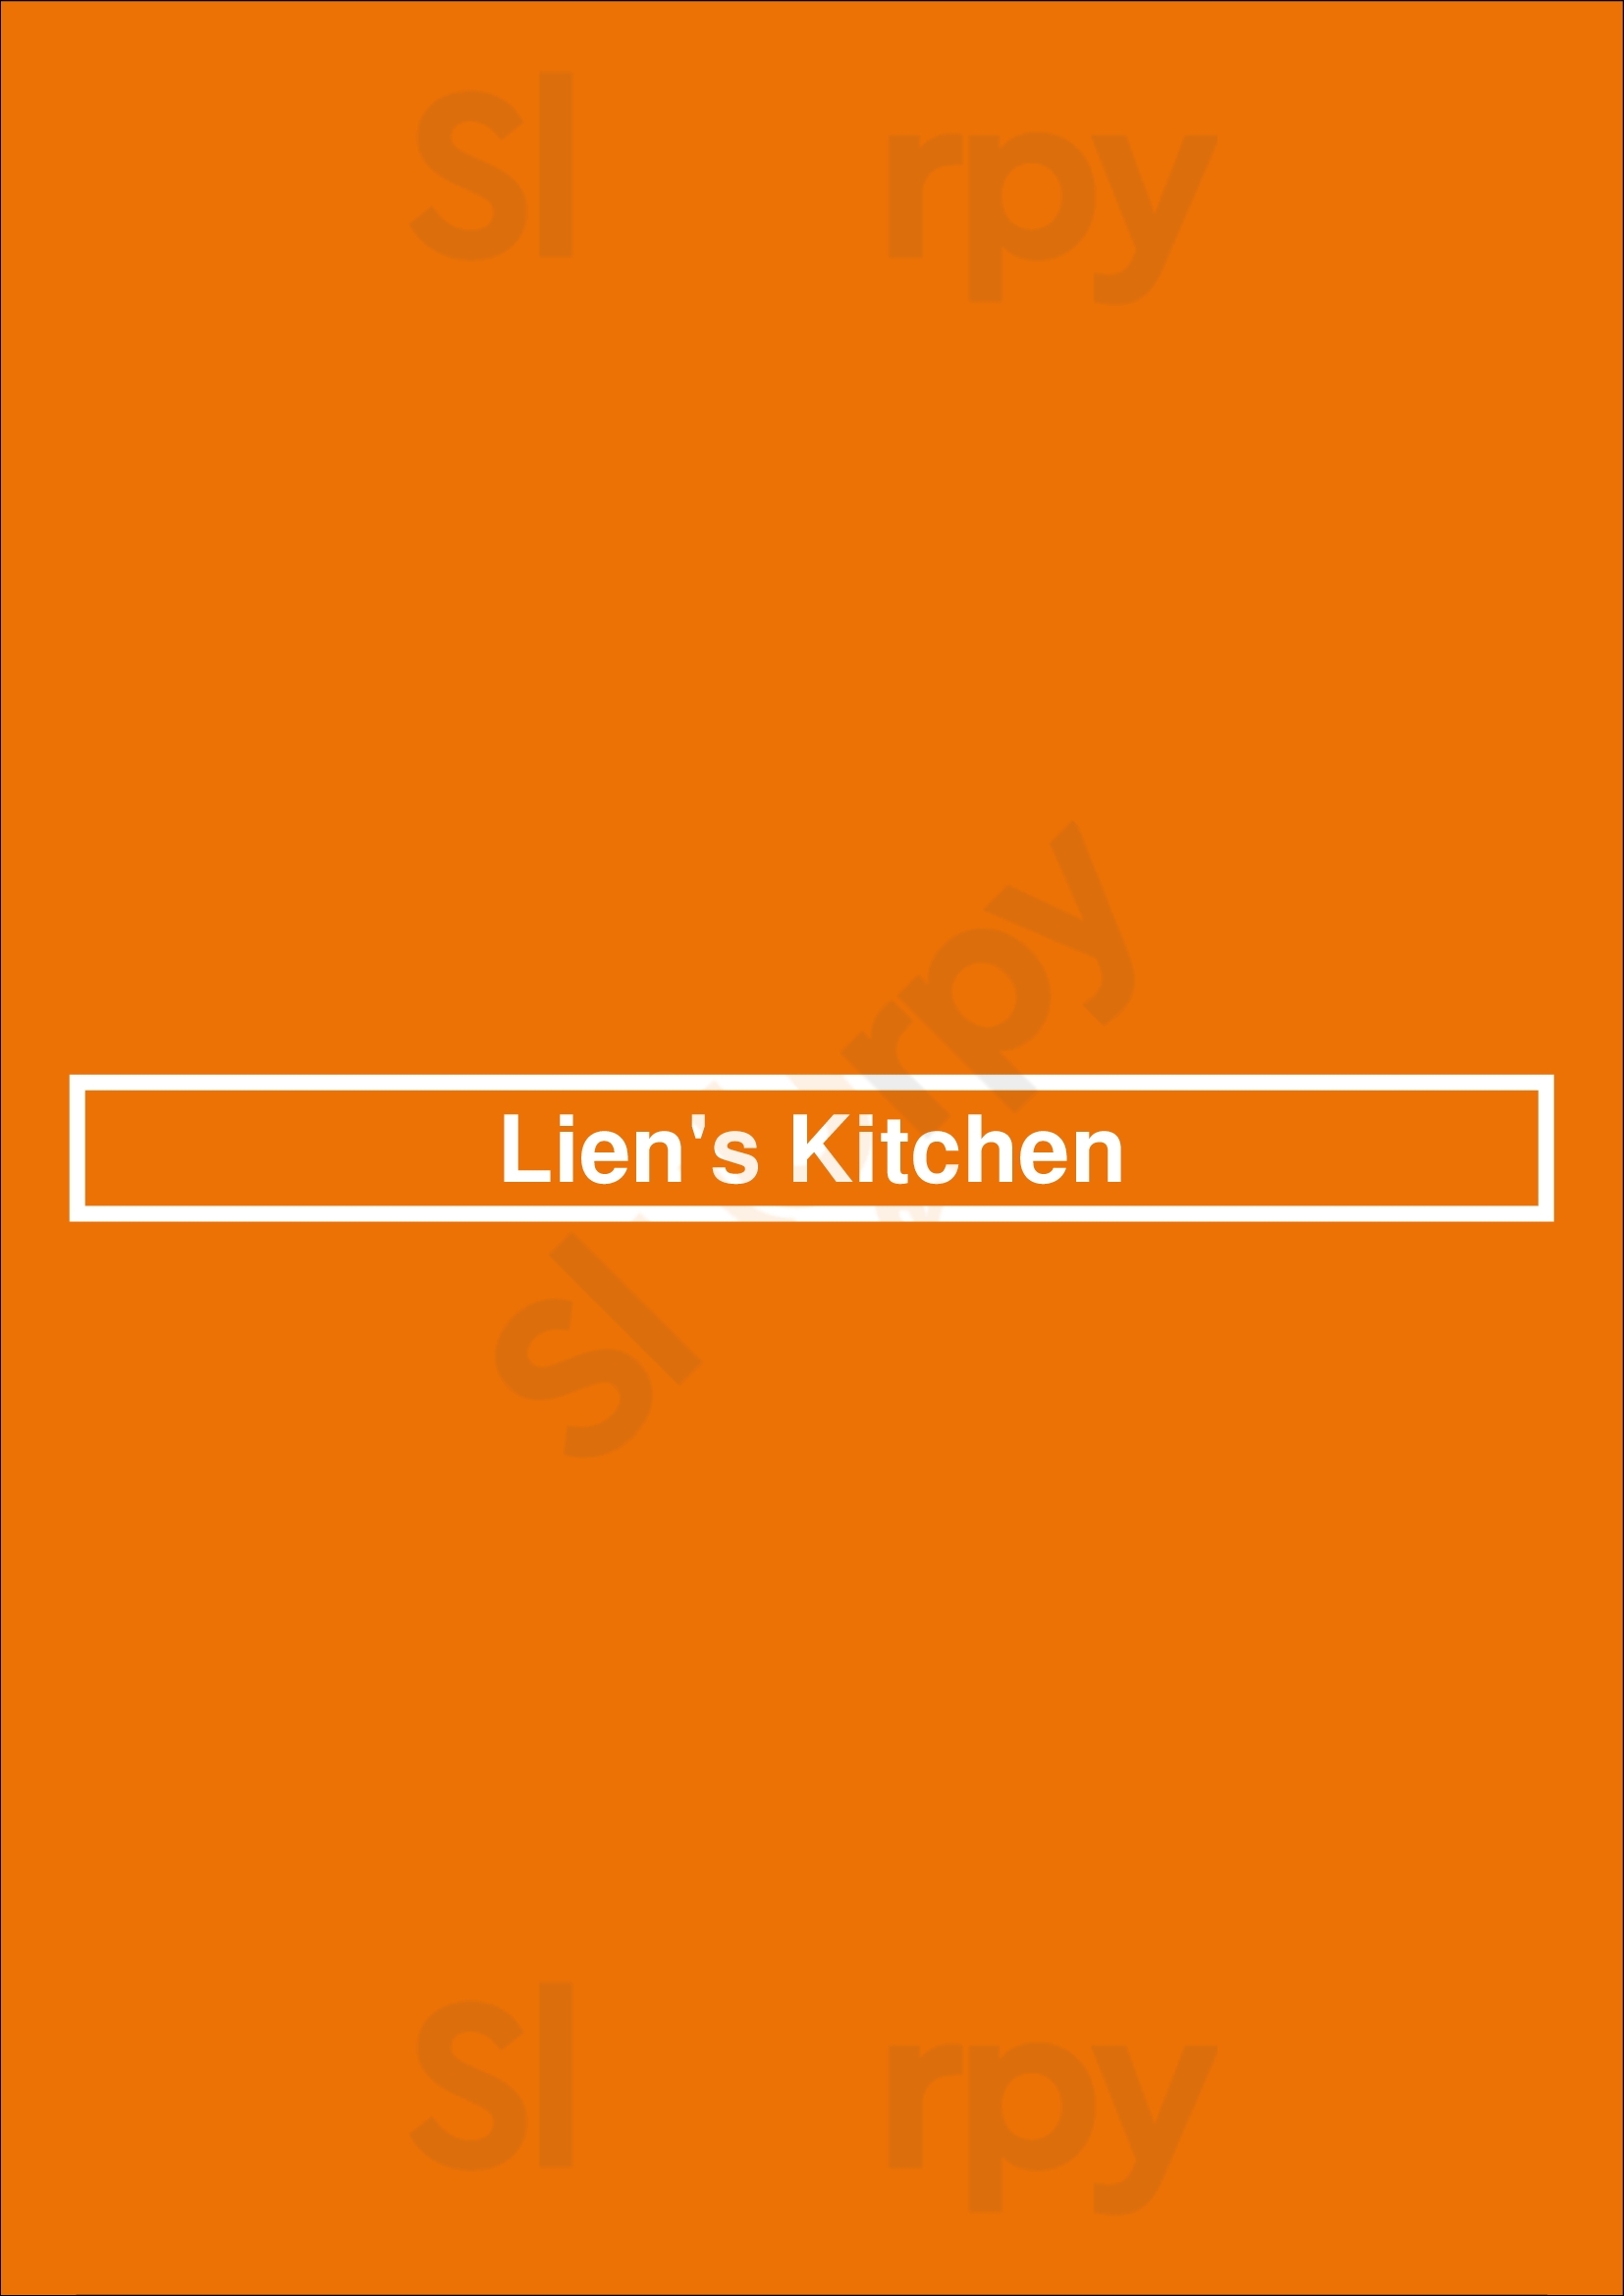 Lien's Kitchen Wassenaar Menu - 1